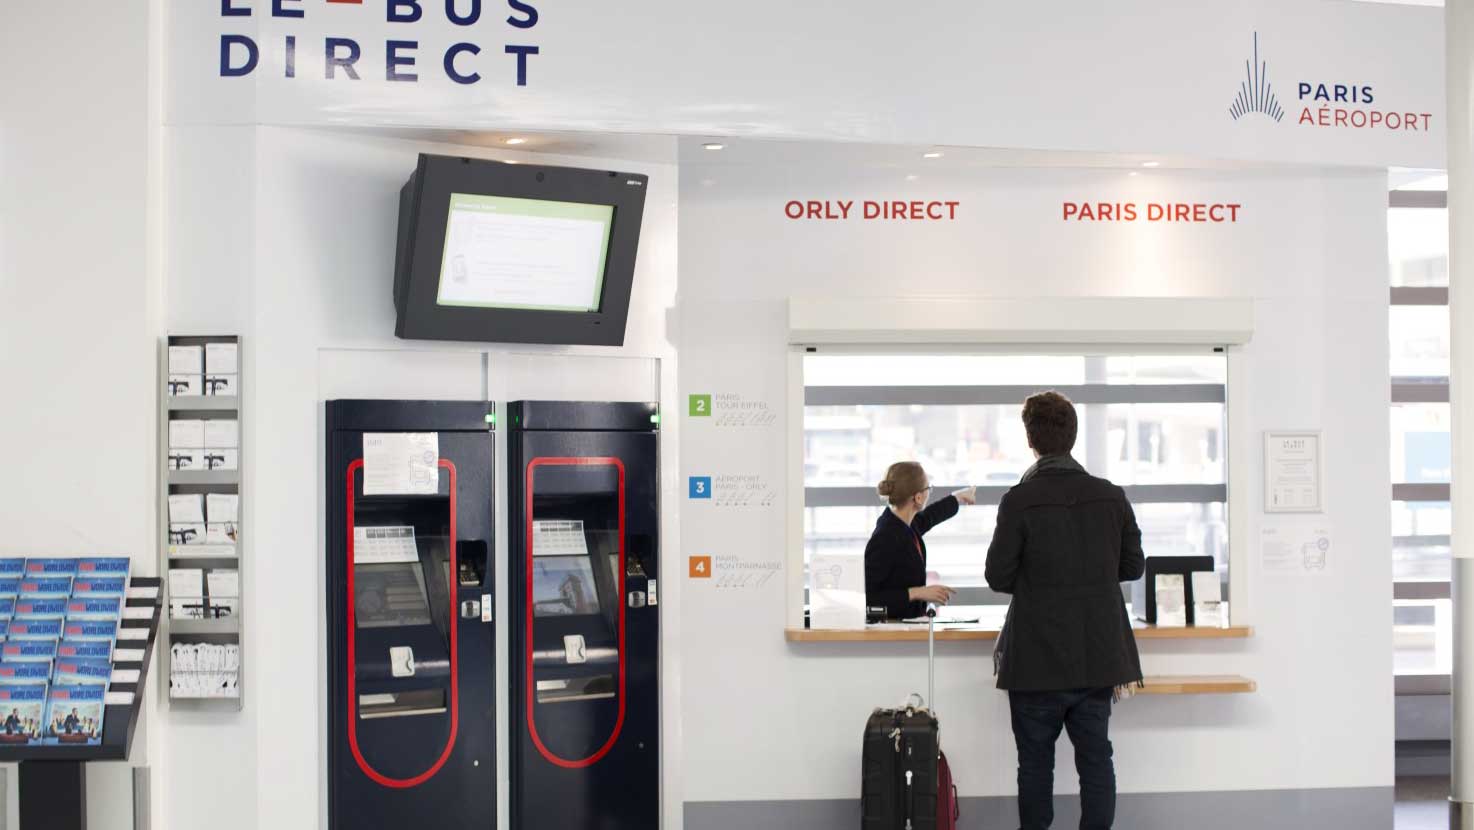 Стойка продажи билетов Le Bus Direct